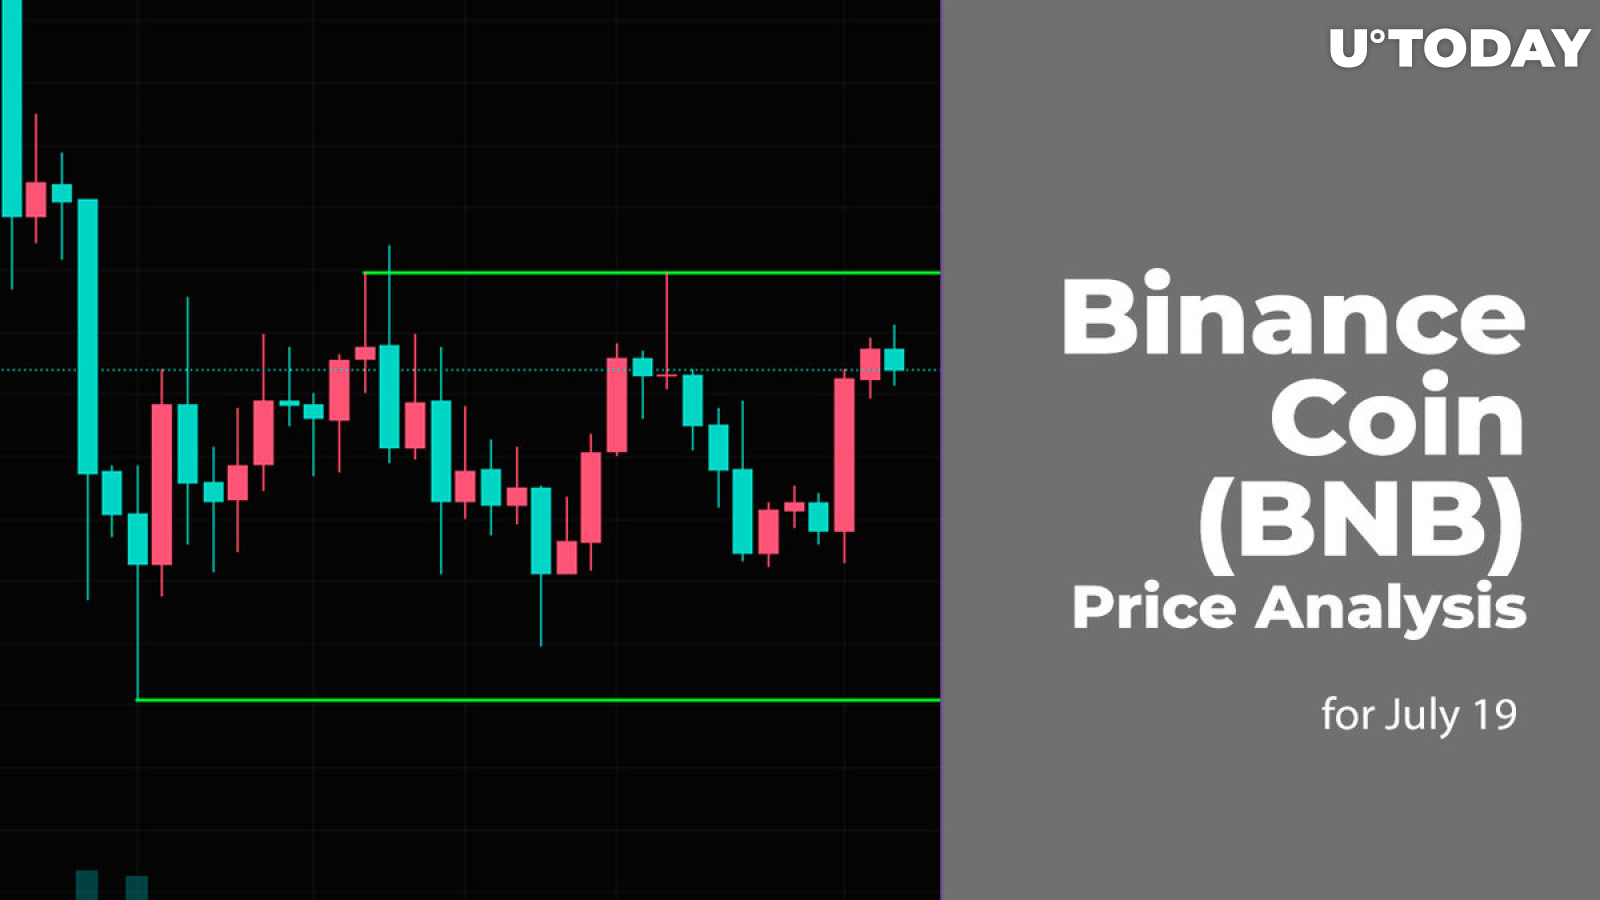 Binance Coin (BNB) Price Analysis for July 18